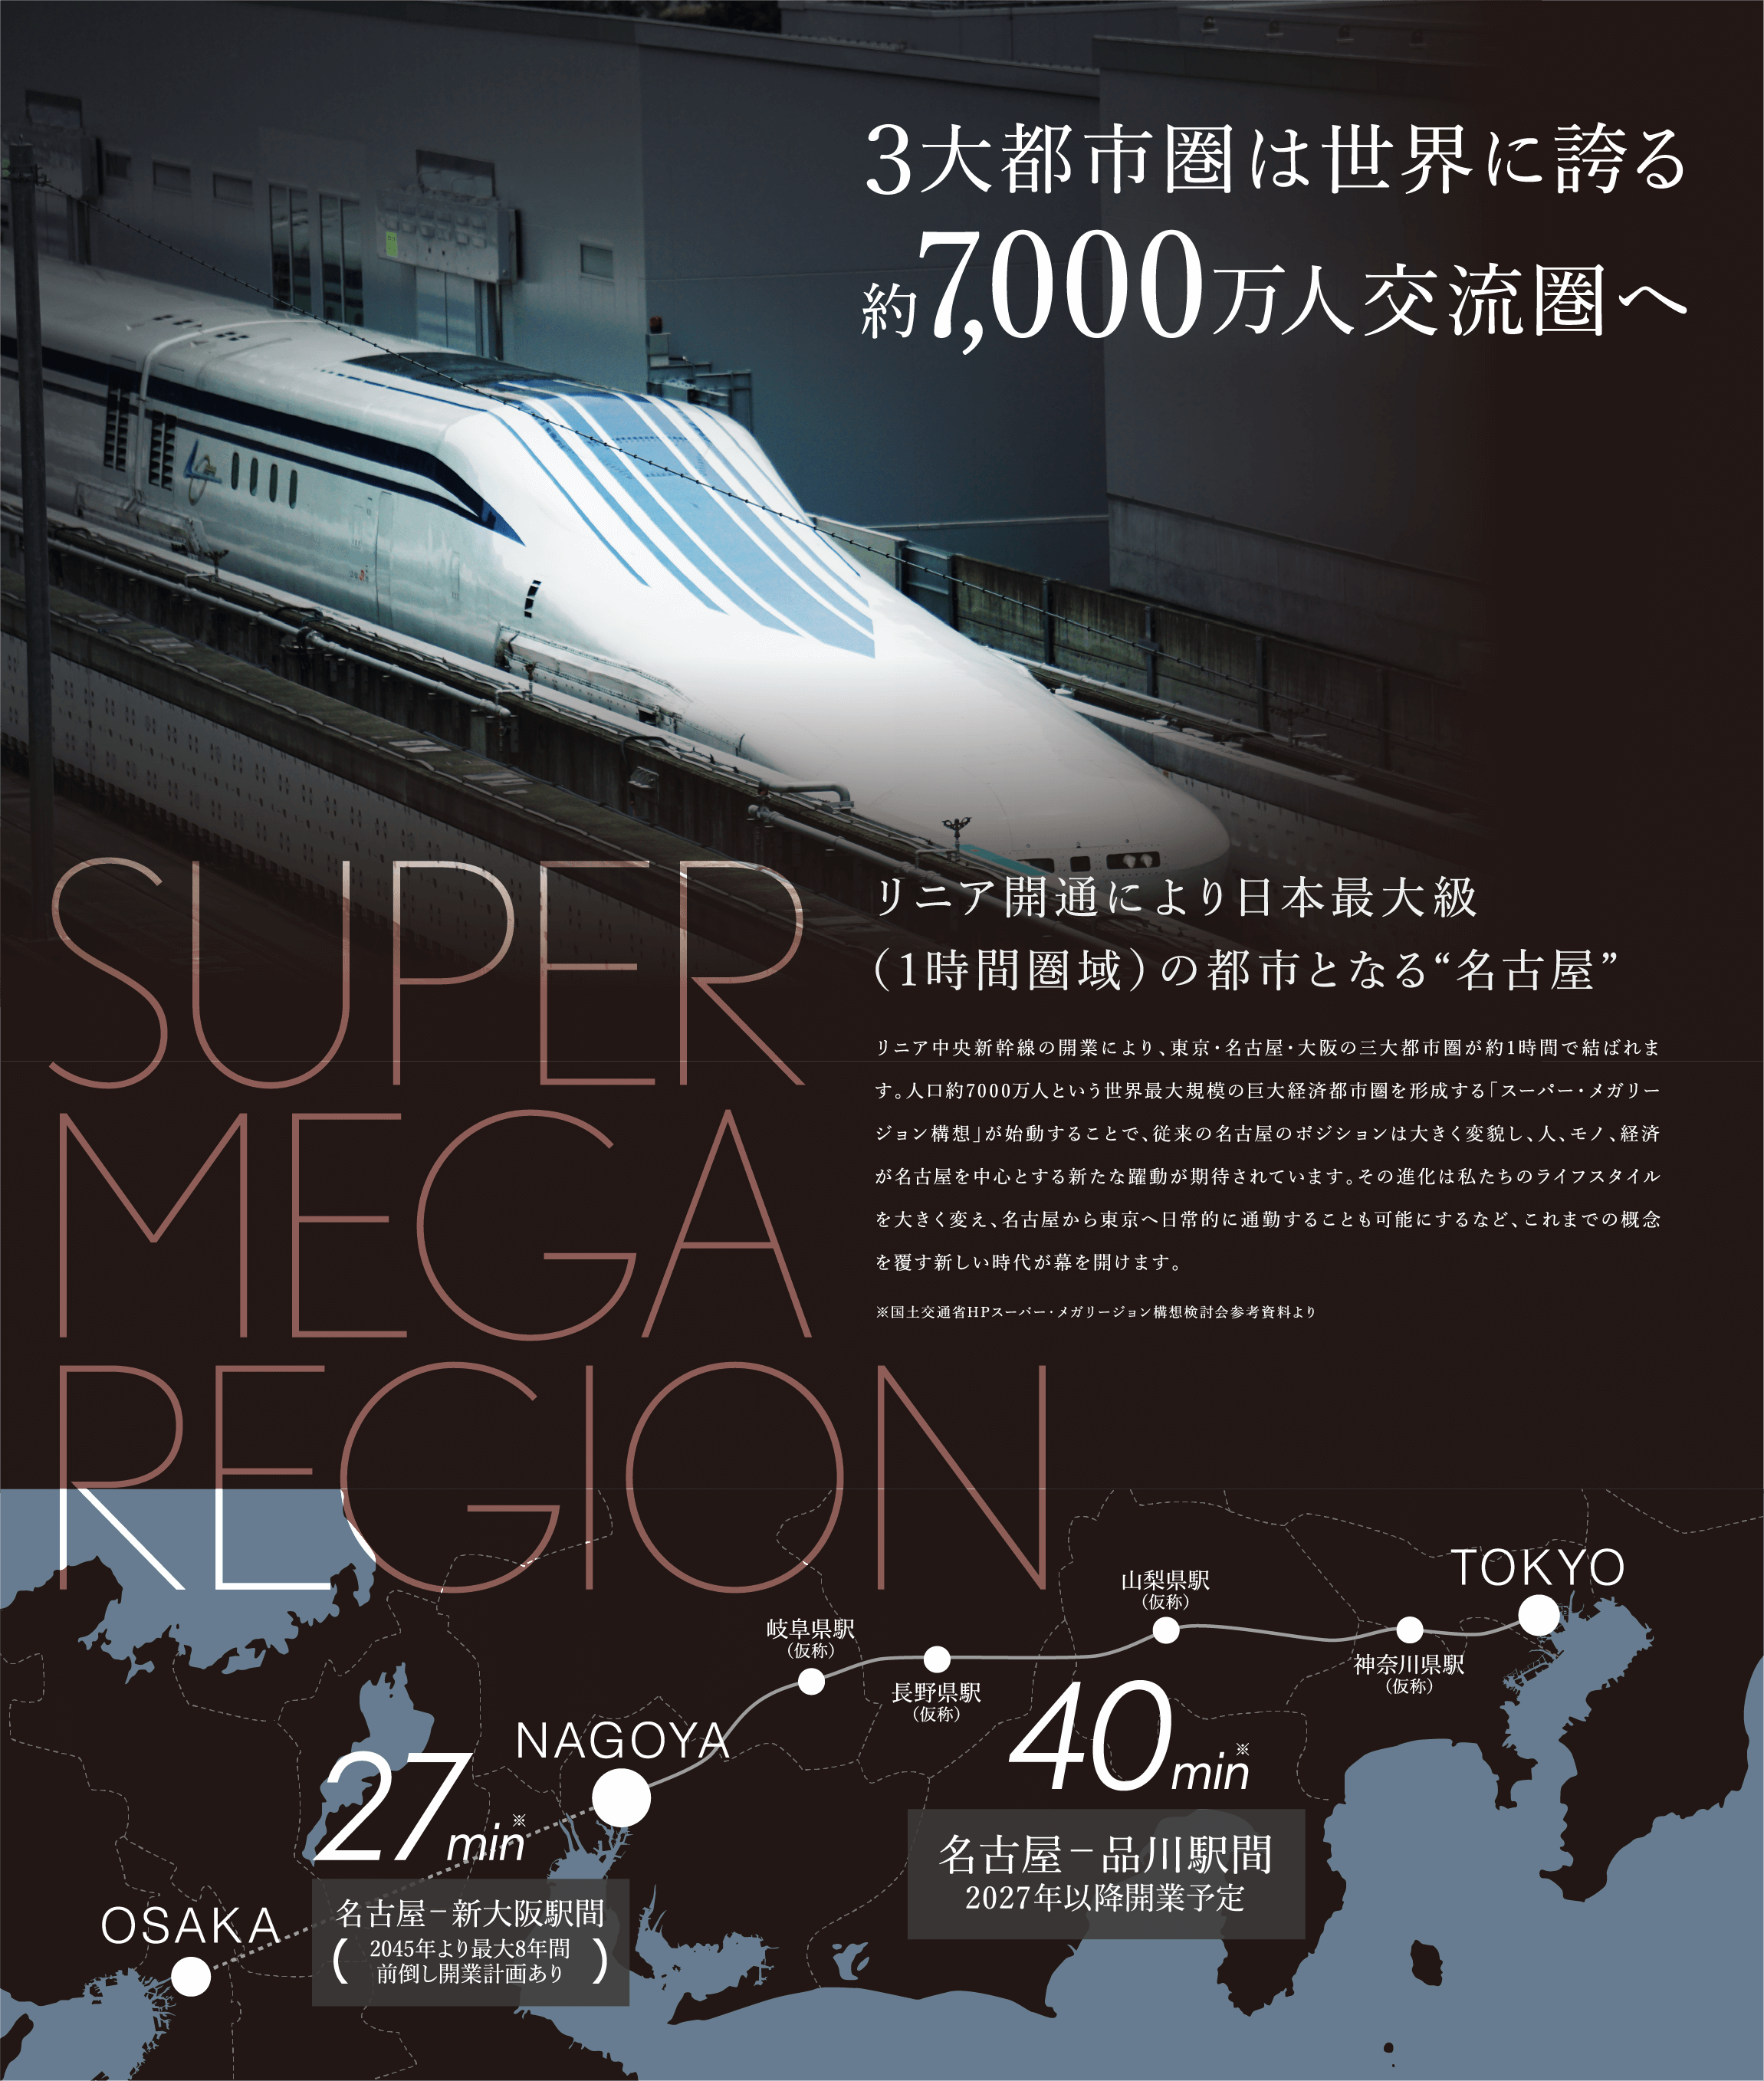 SUPERMEGAREGION名古屋駅エリアは日本最大級（1時間圏人口）の都市へ リニア中央新幹線の開業により、東京・名古屋・大阪の三大都市圏が約1時間で結ばれます。人口約7000万人という世界最大規模の巨大経済都市圏を形成する「スーパー・メガリージョン構想」が始動することで、従来の名古屋のポジションは大きく変貌し、人、モノ、経済が名古屋を中心とする新たな躍動が期待されています。その進化は私たちのライフスタイルを大きく変え、名古屋から東京へ日常的に通勤することも可能にするなど、これまでの概念を覆す新しい時代が幕を明けます。 ※国土交通省HPスーパー・メガリージョン構想検討会参考資料より